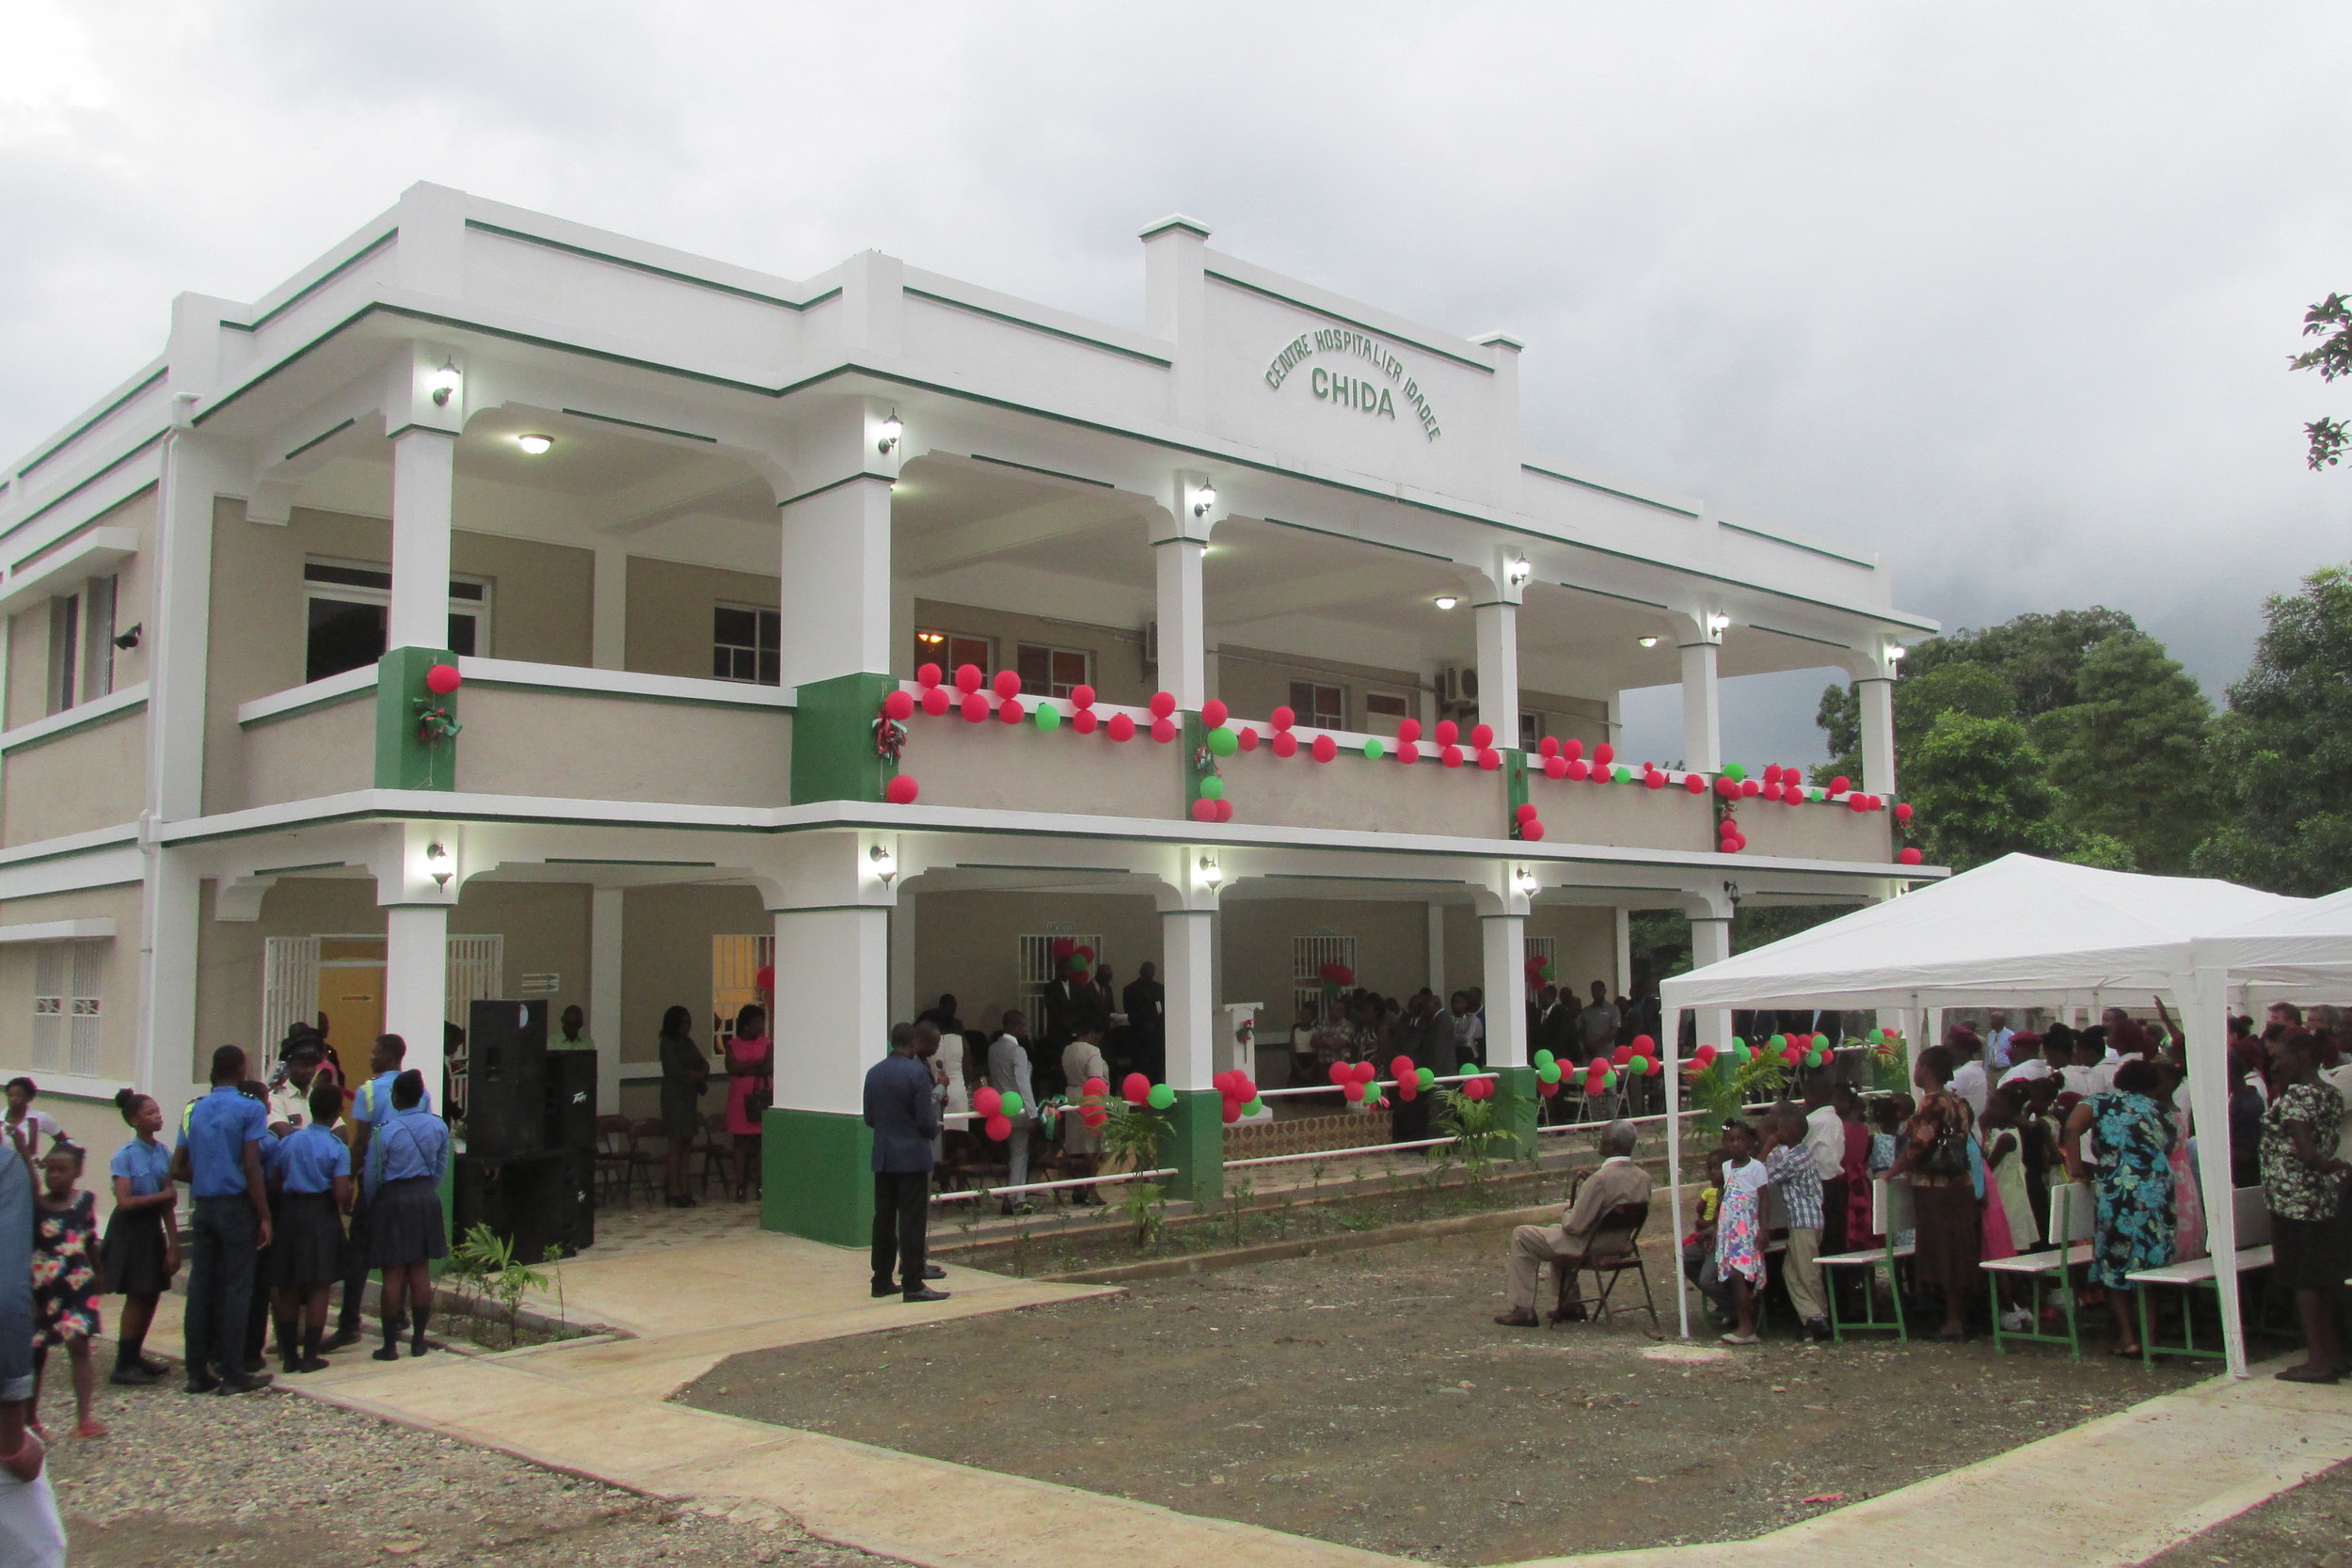  Dedication Day festivities at the newly opened CHIDA Hospital in Cap Haitien, Haiti 